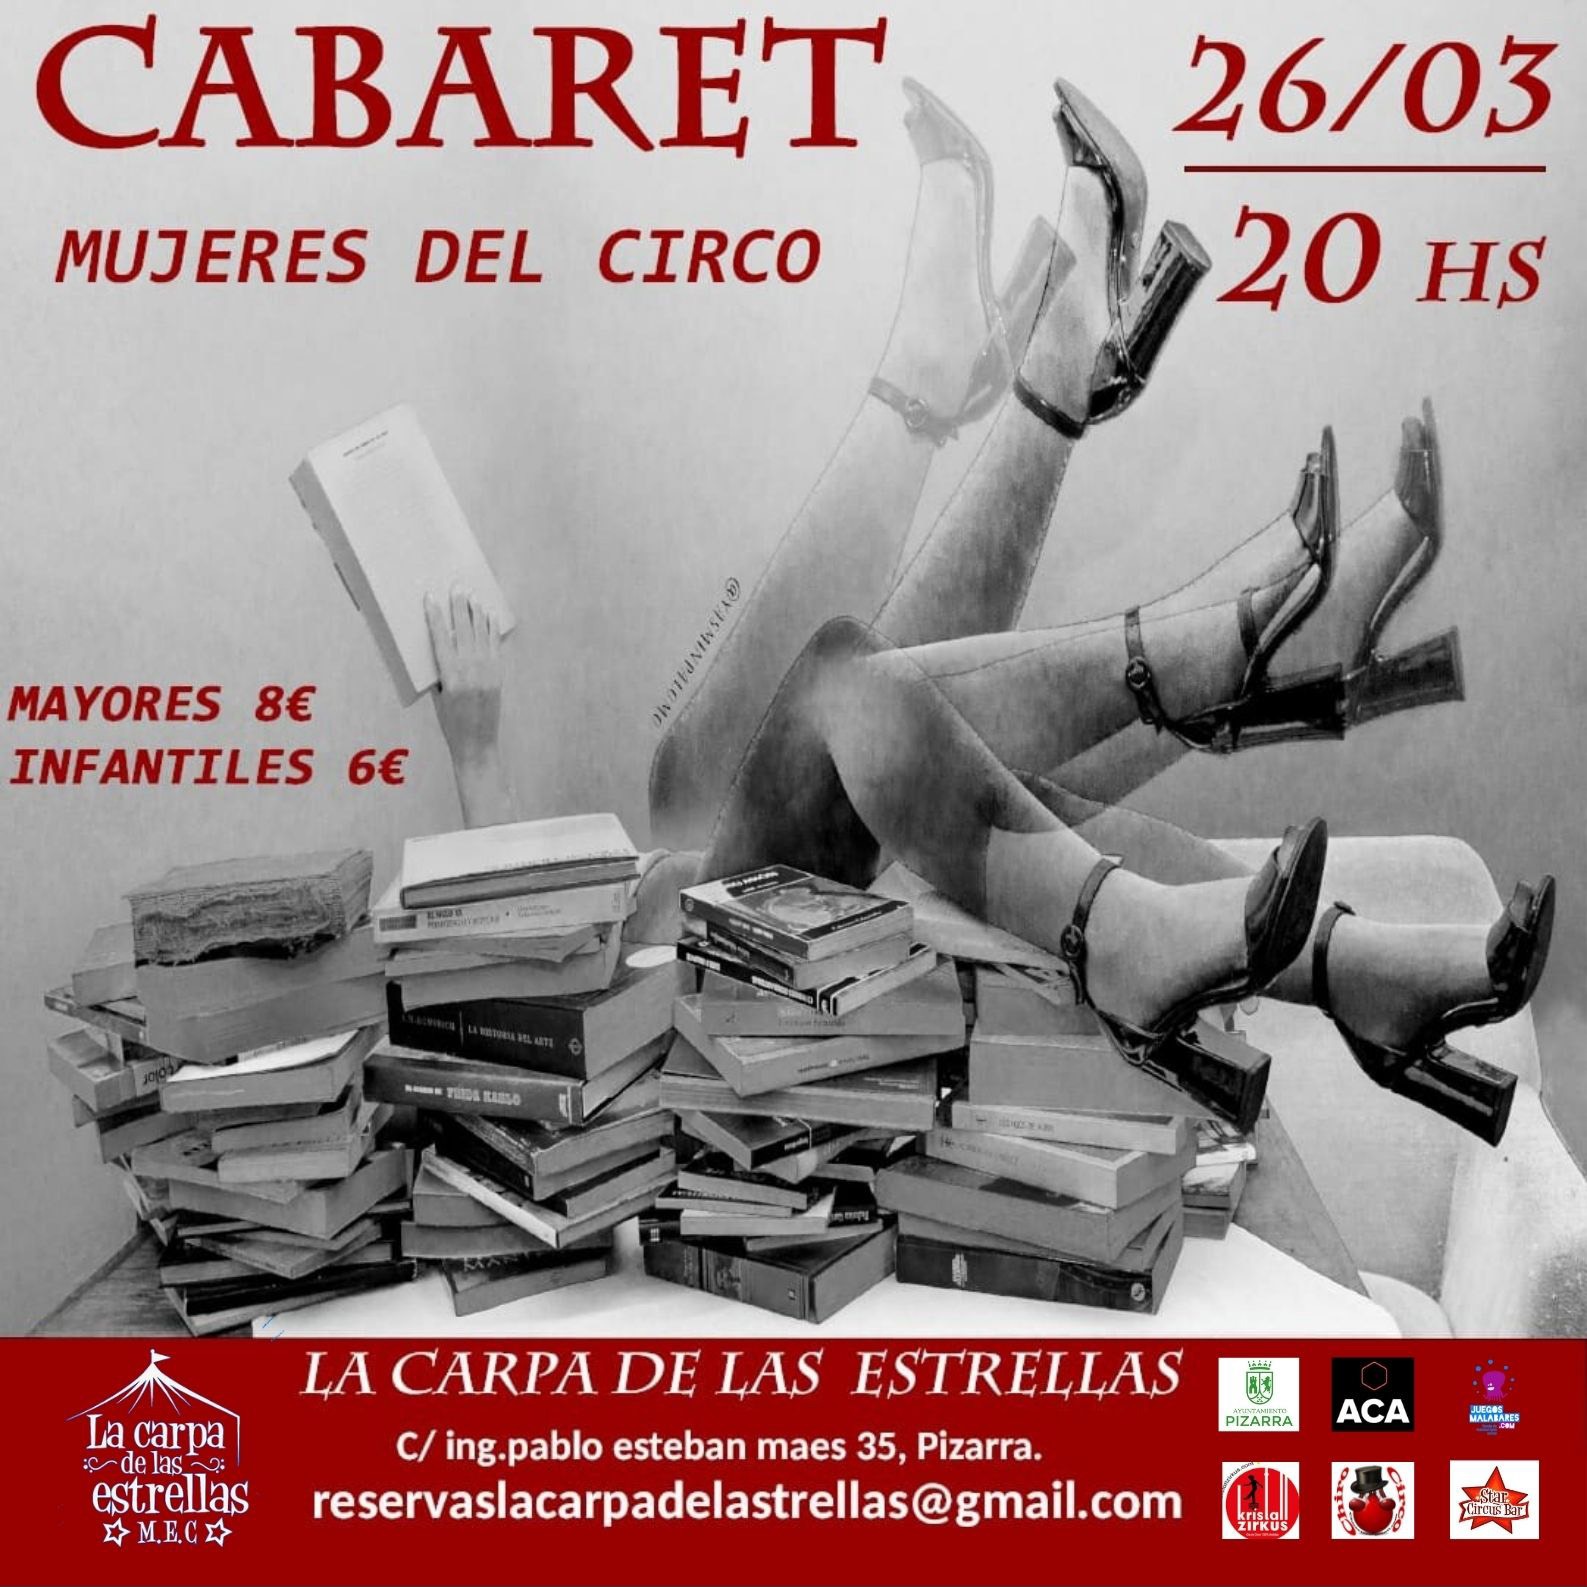 /ficheros/actualidad/cabaret_mujeres_circo.jpeg